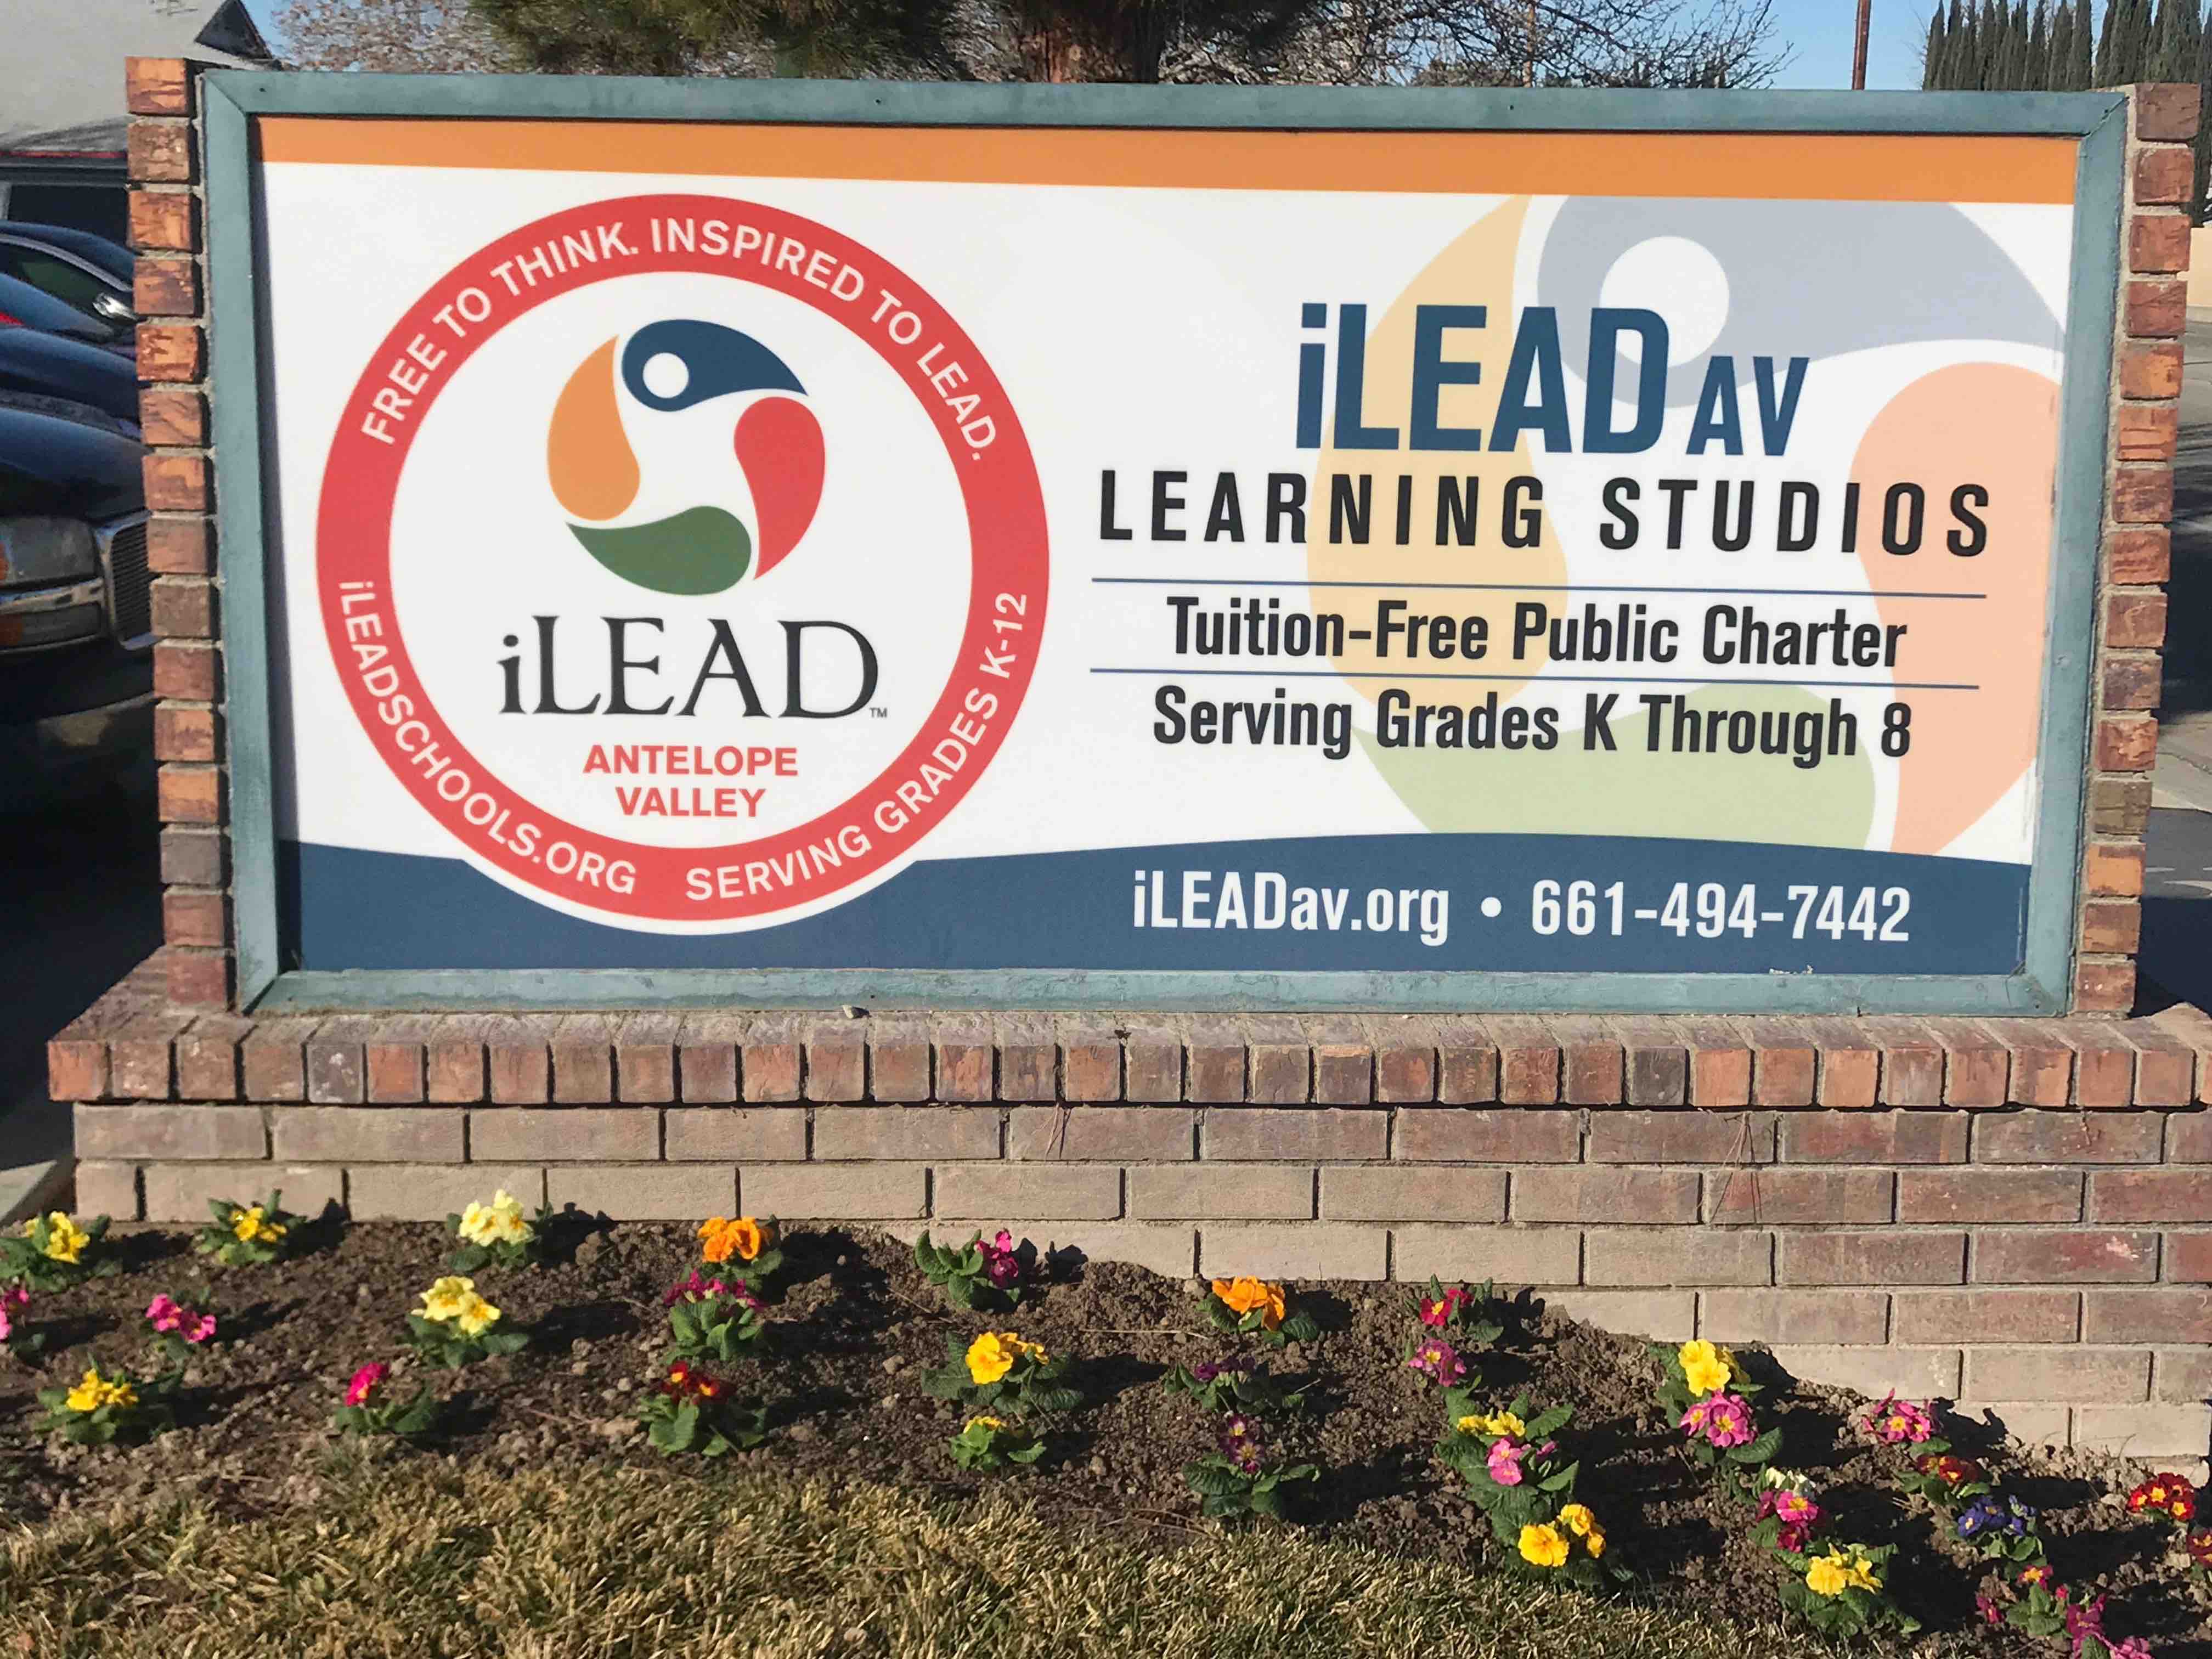 iLEAD AV Learning Studios